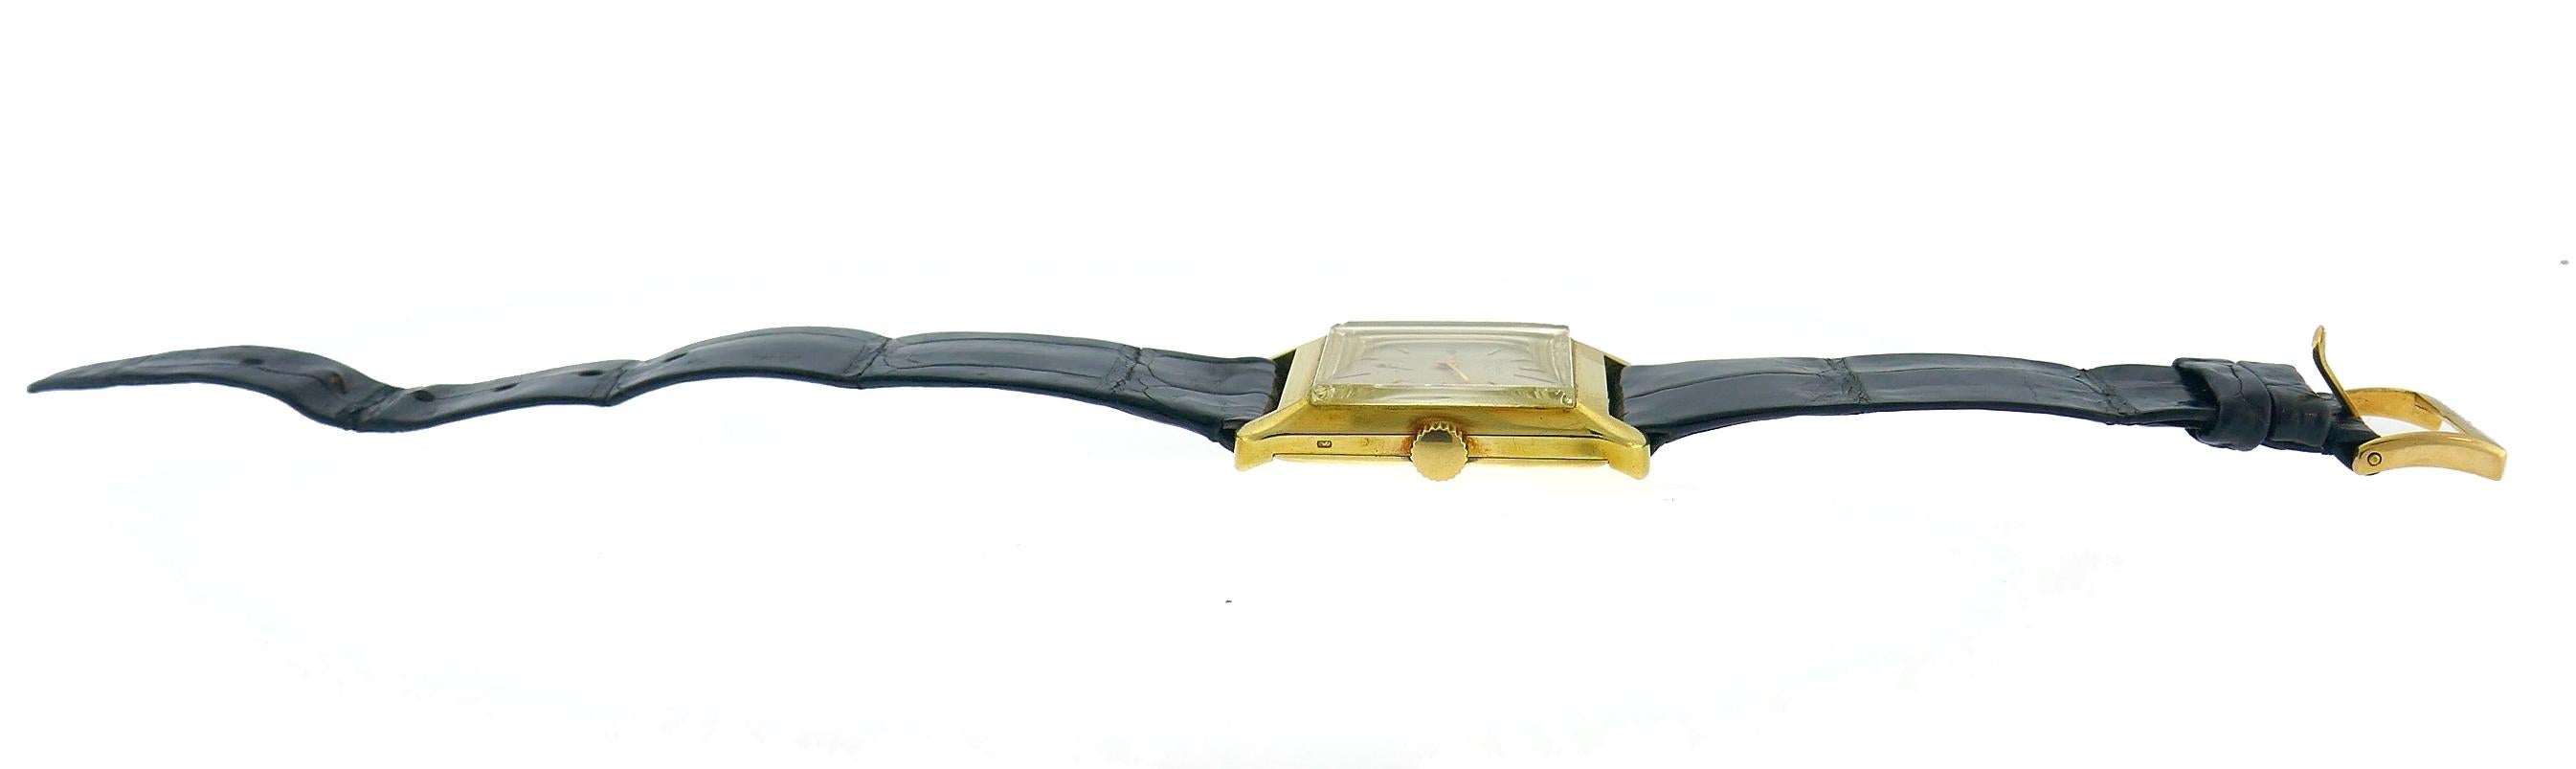 Patek Philippe 18k Gold Manual Wind Wristwatch 5